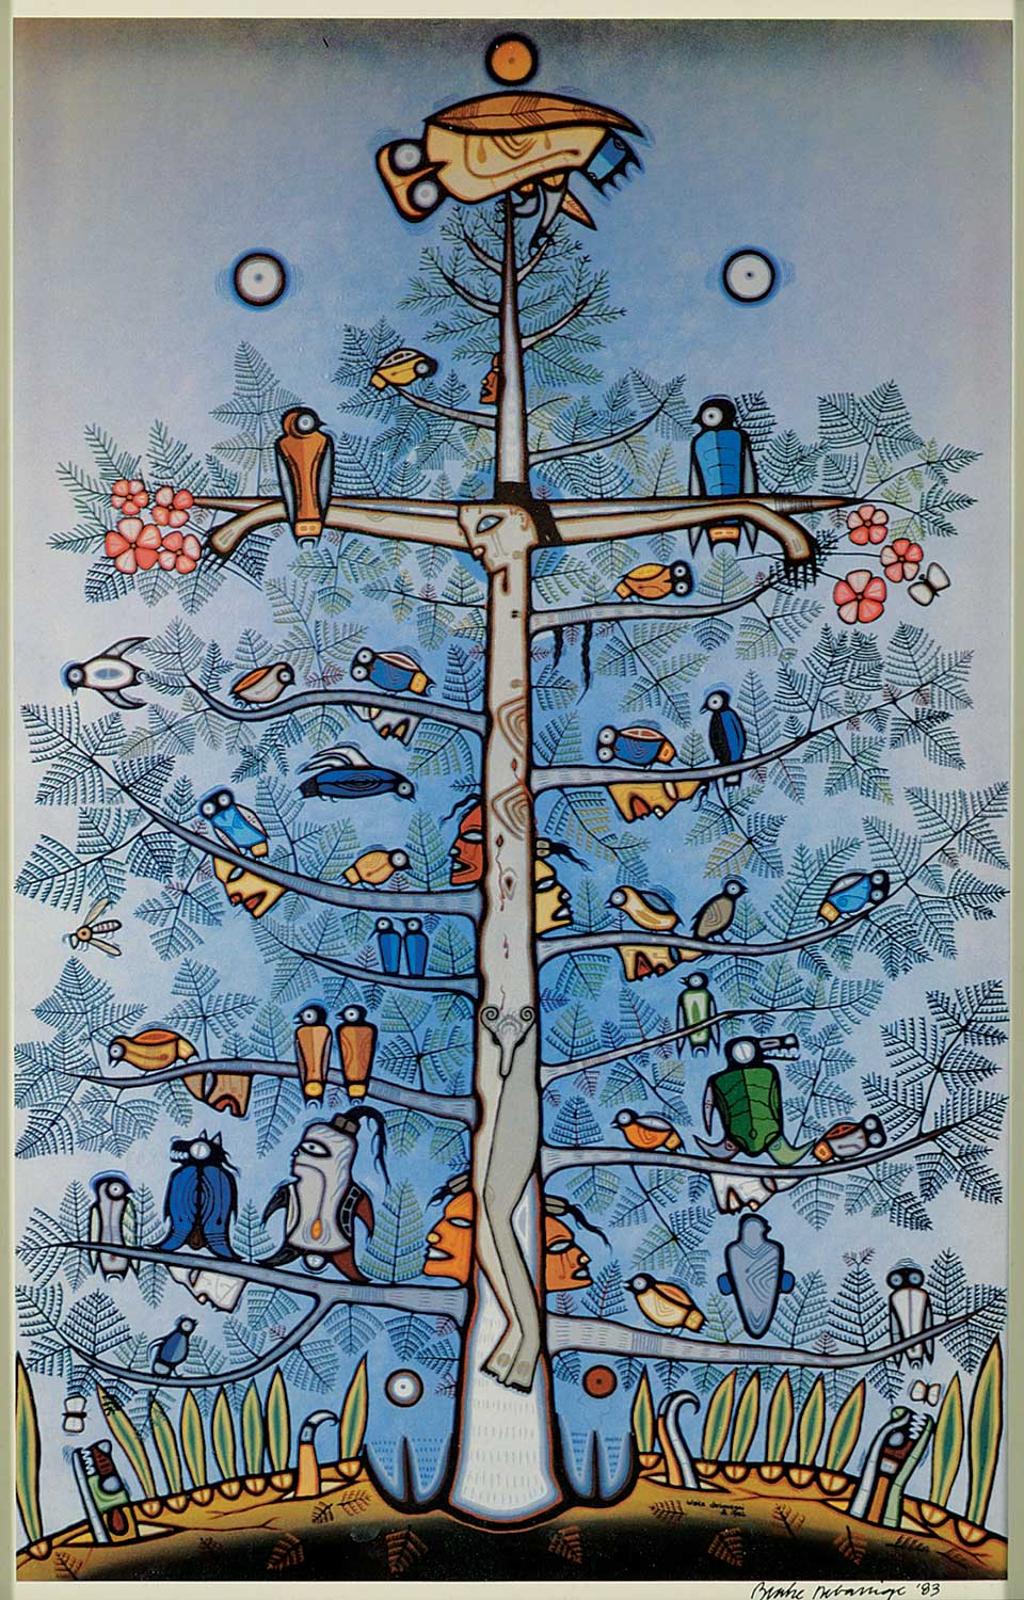 Blake Randolph Debassige (1956) - Untitled - Tree of Life/Crucifix